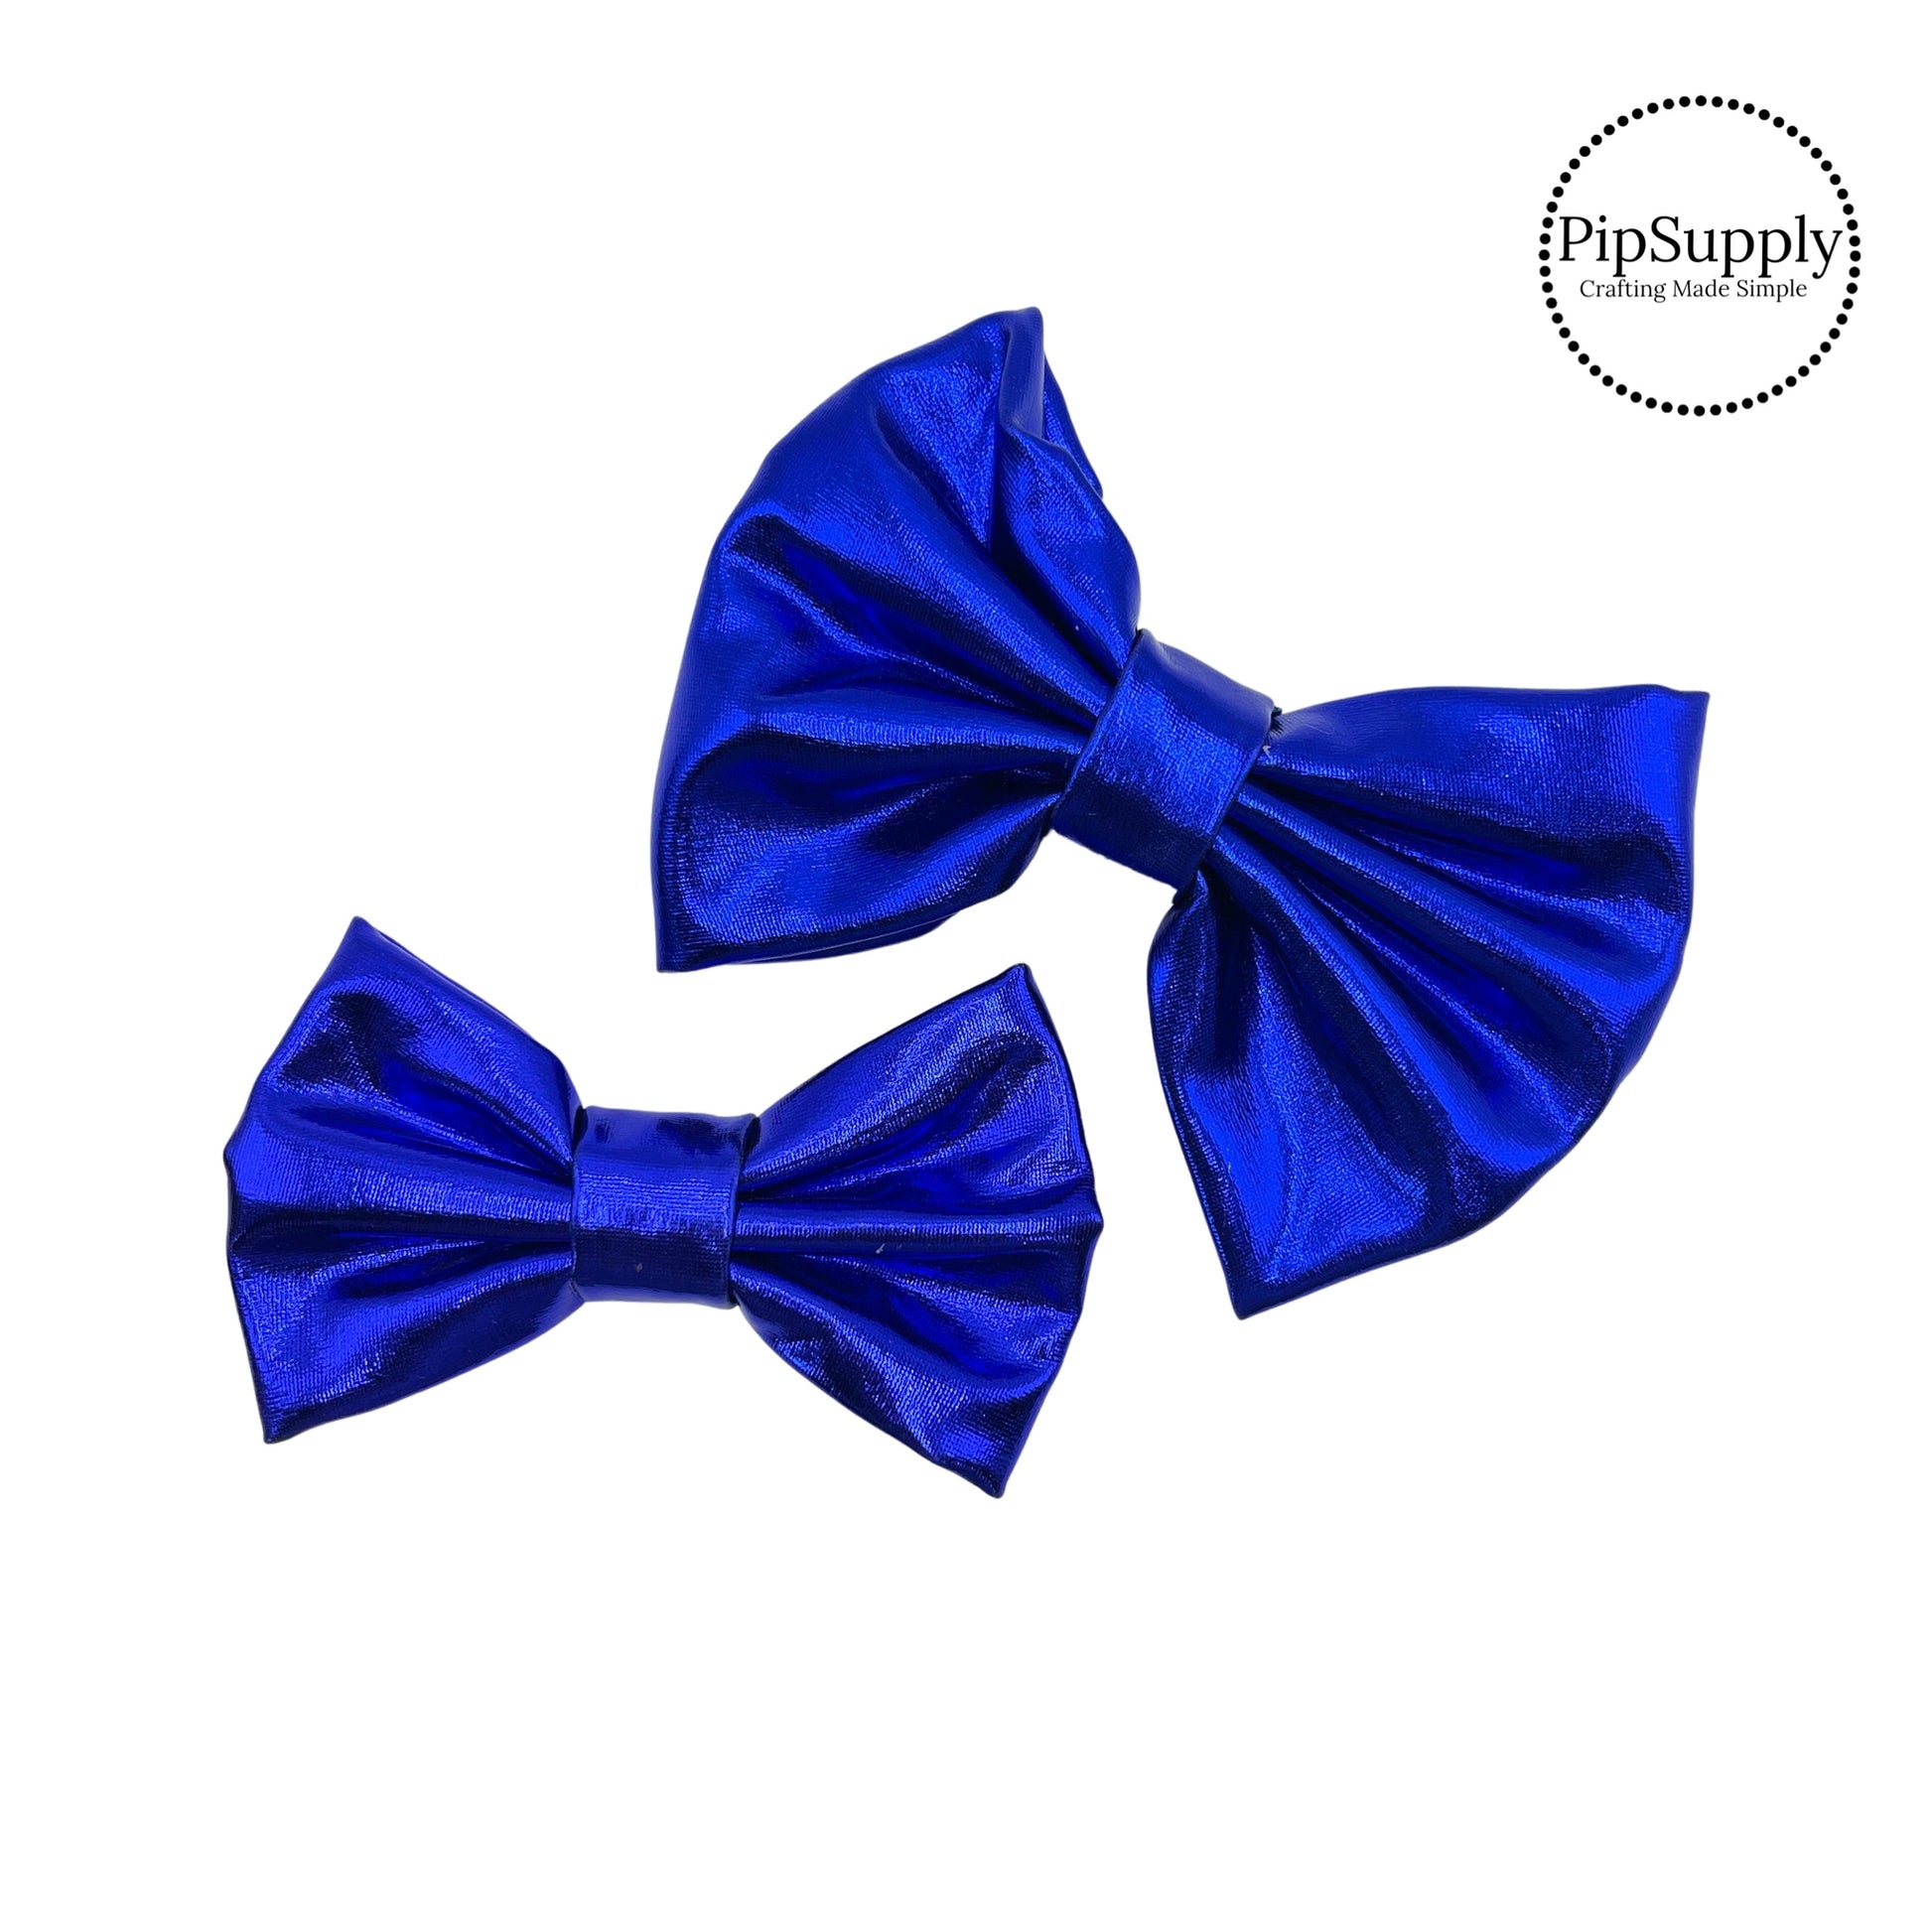 Solid cobalt blue soft metallic bow